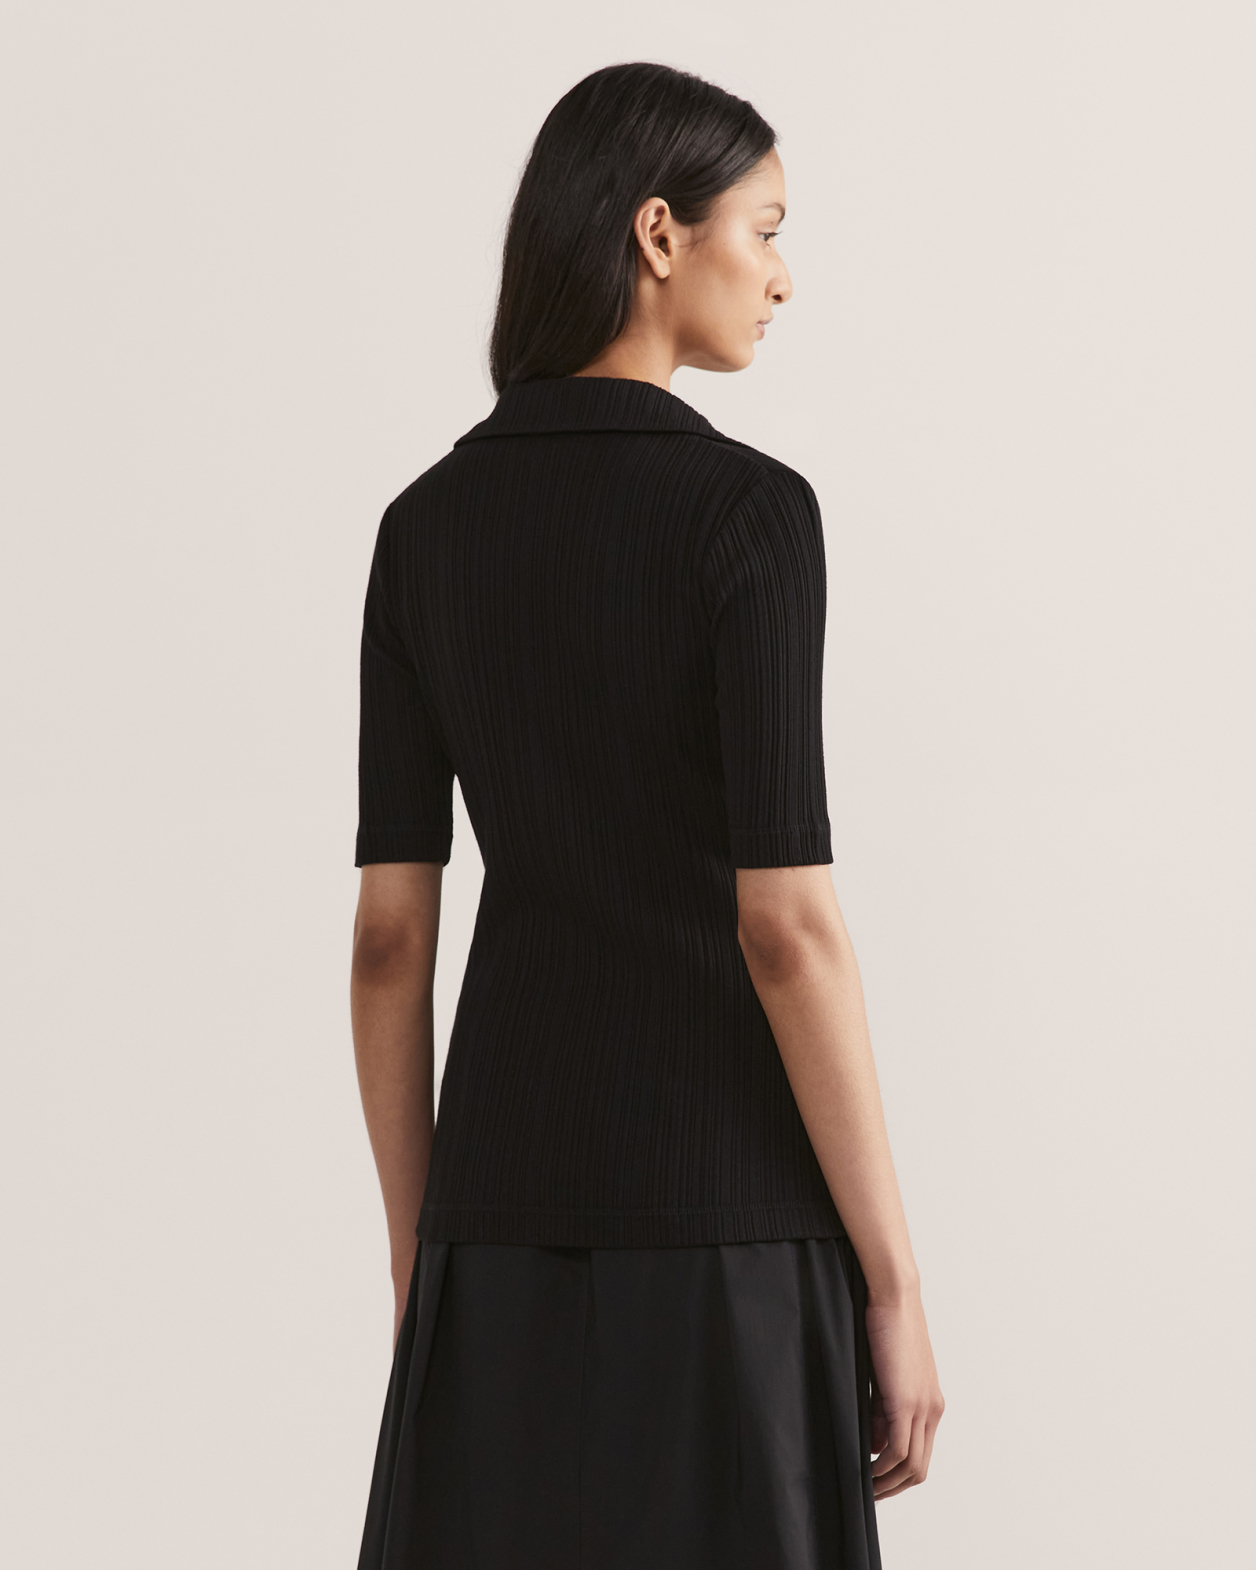 Sabine Half Sleeve Shirt in BLACK